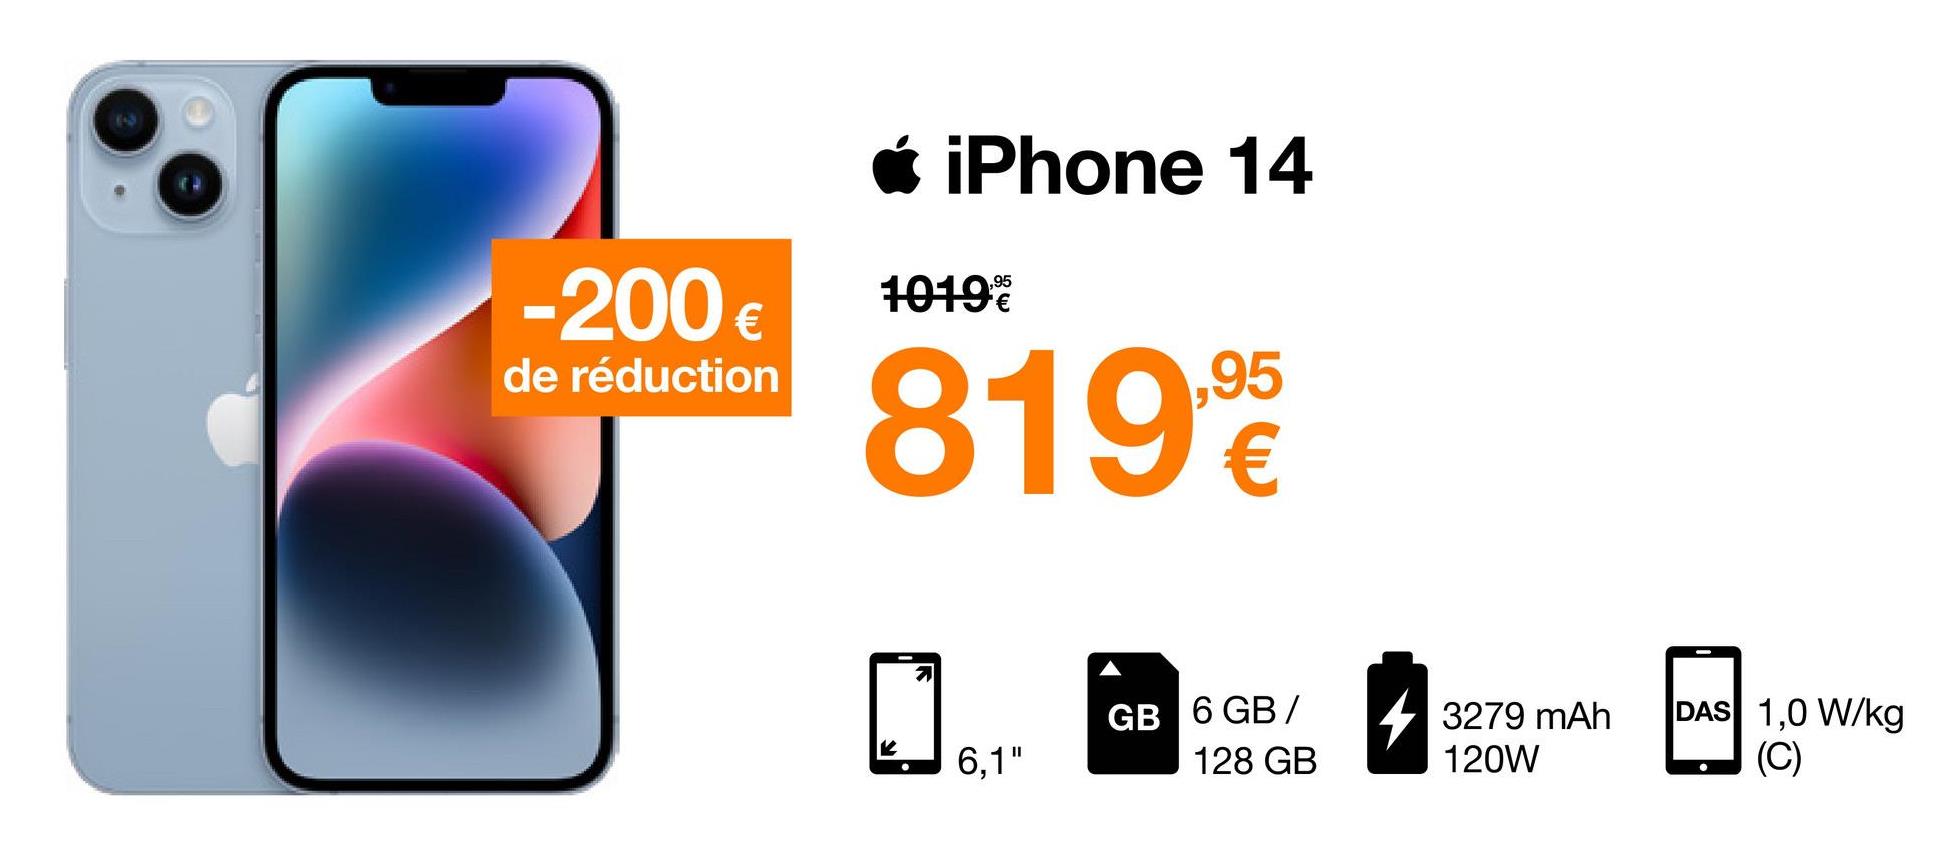 -200 €
de réduction
iPhone 14
1019%
81990
7
♫
6,1"
GB 6 GB/
128 GB
3279 mAh
120W
DAS 1,0 W/kg
(C)